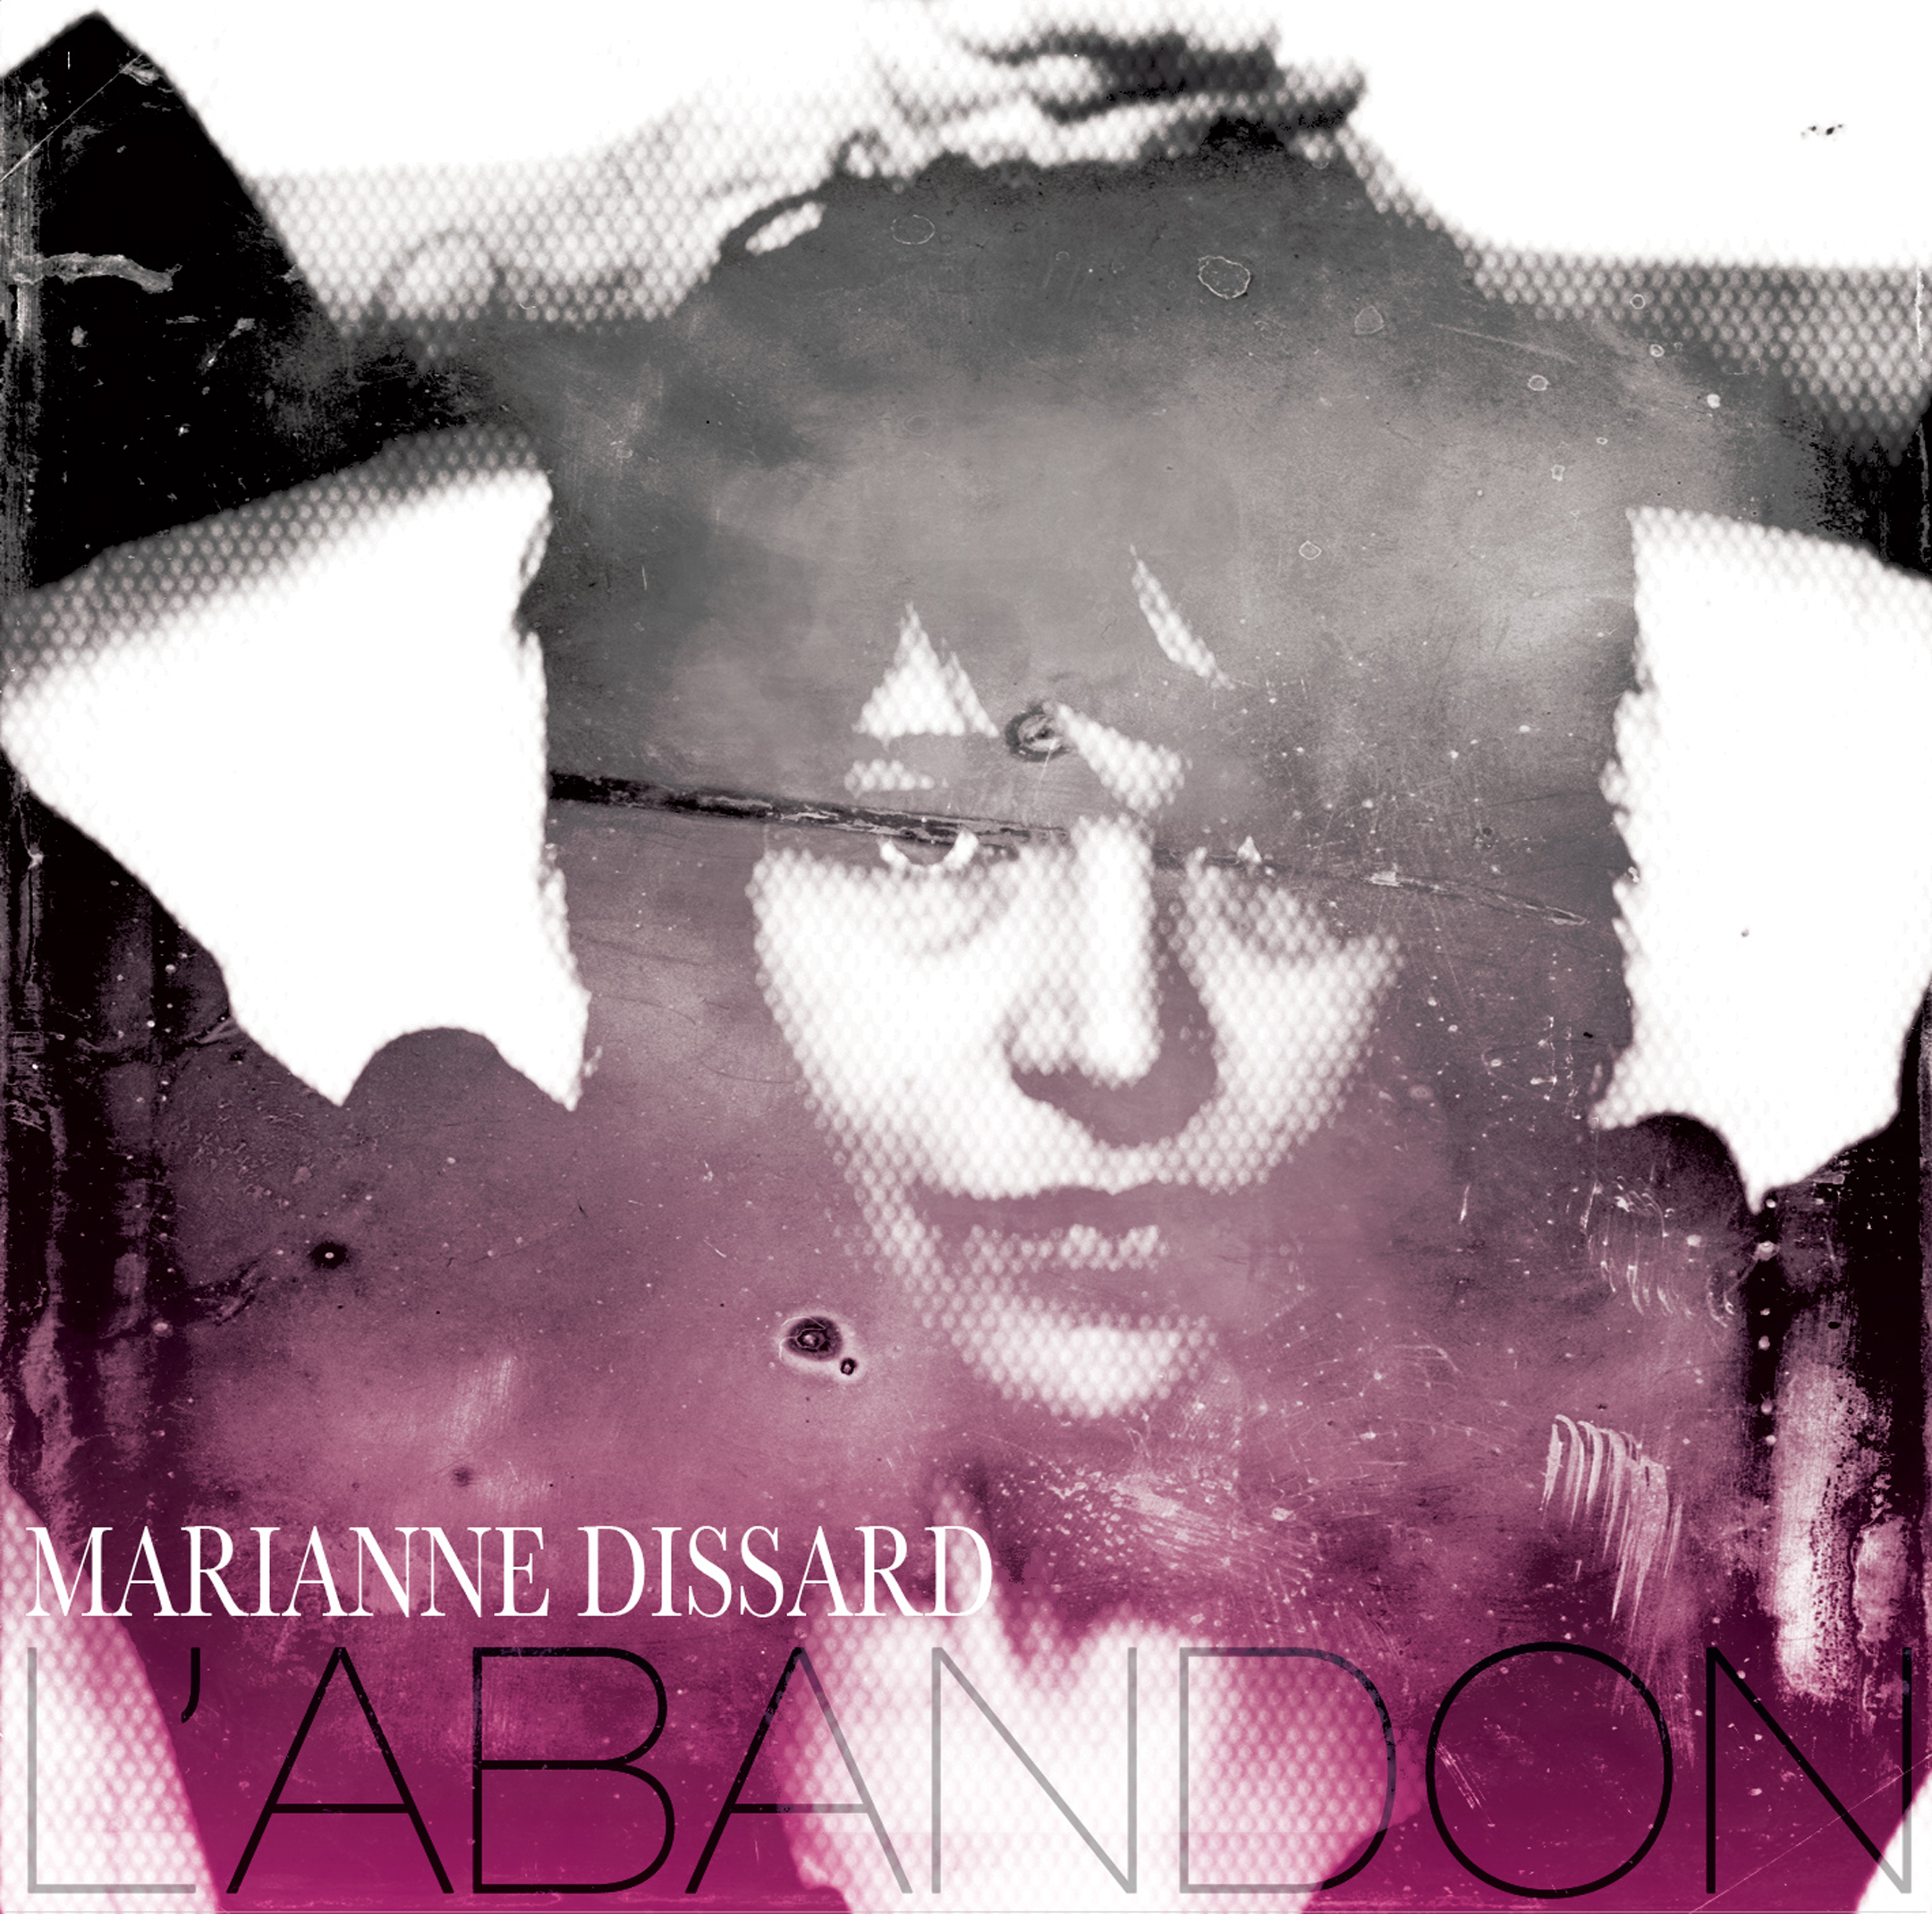 MARIANNE DISSARD "L'Abandon" CD